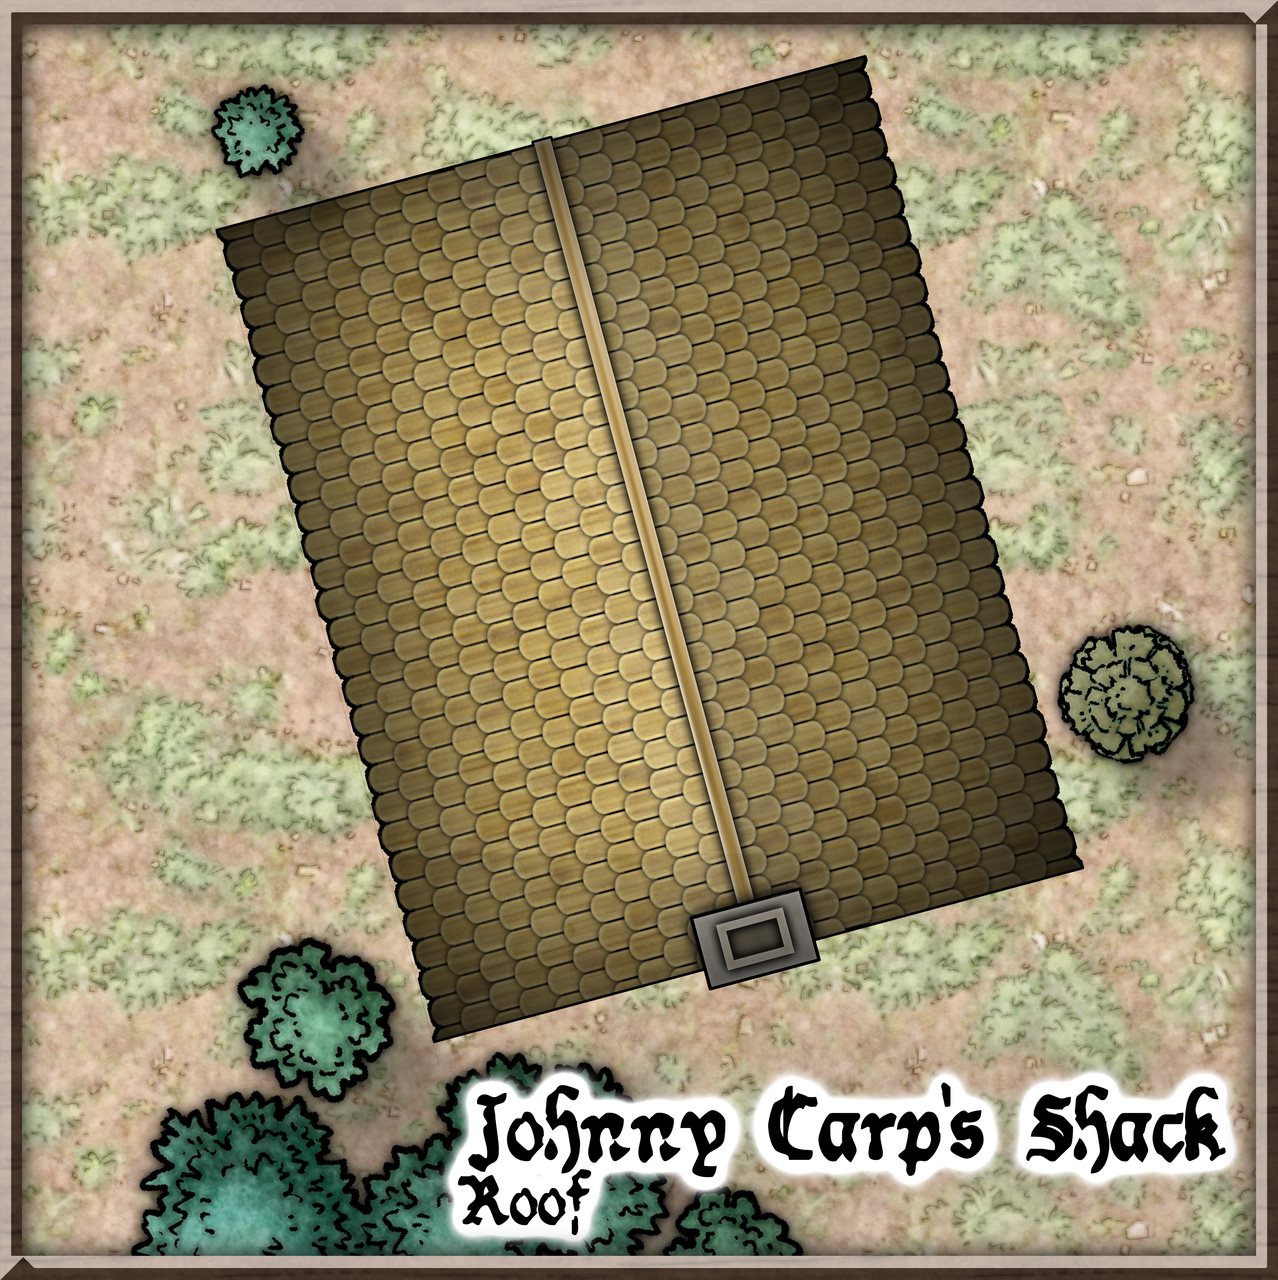 Nibirum Map: johnny carp's shack roof by arsenico13